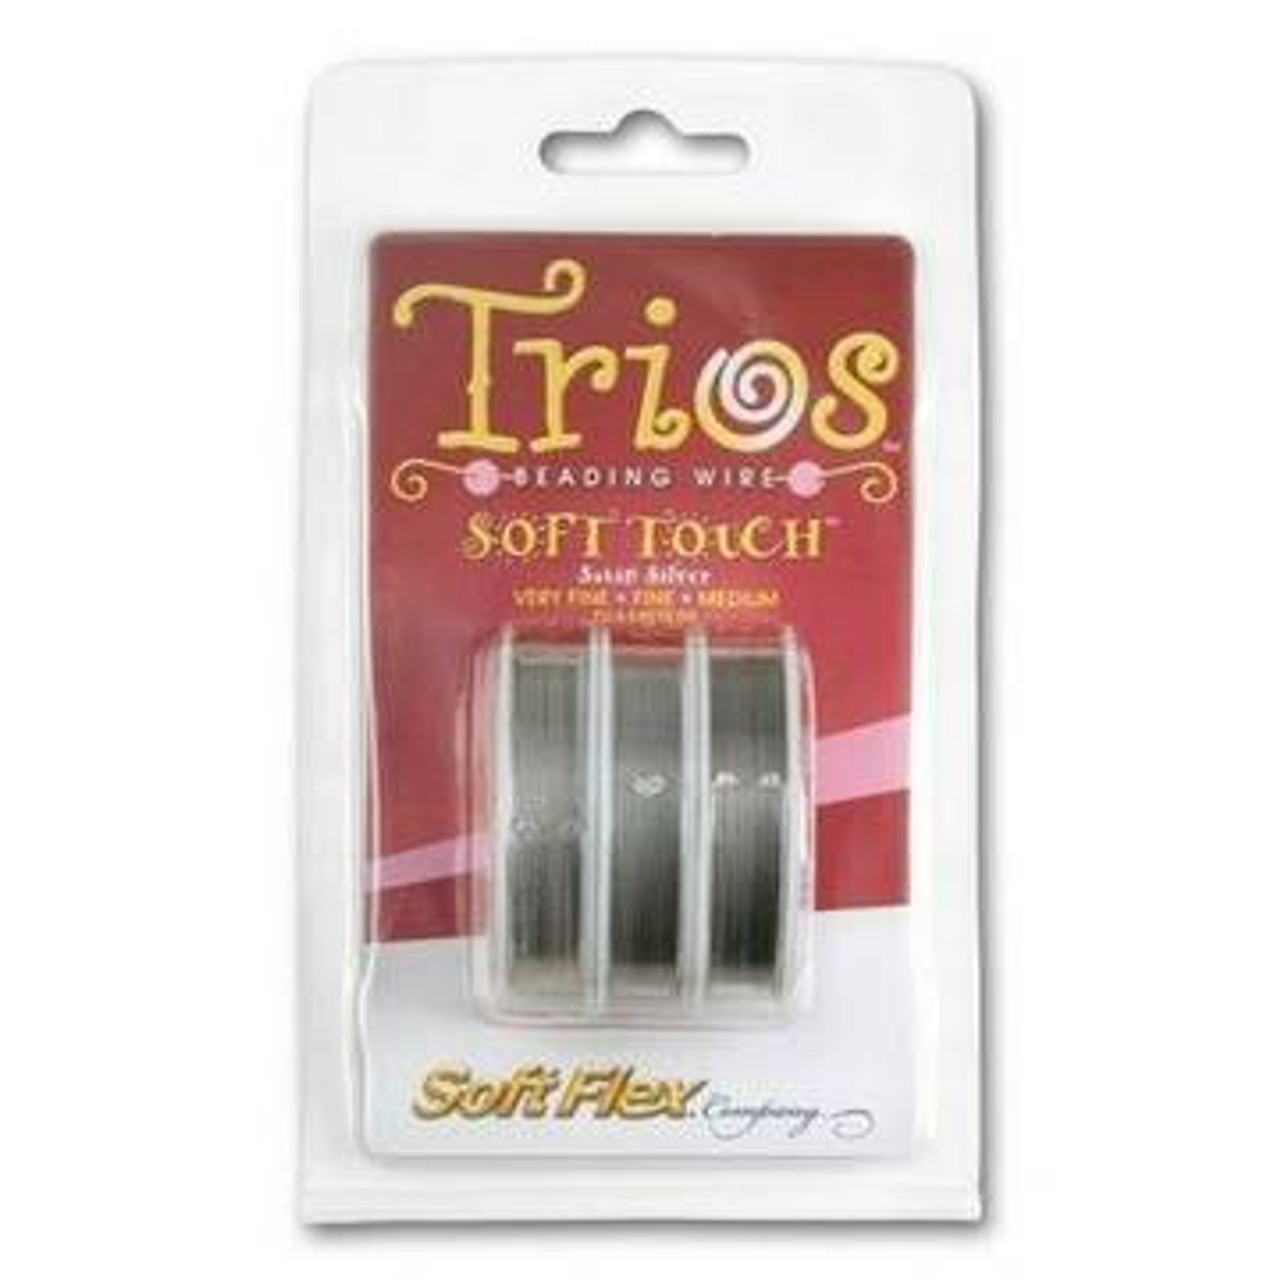 Soft Flex Soft Touch Trios SATIN SILVER